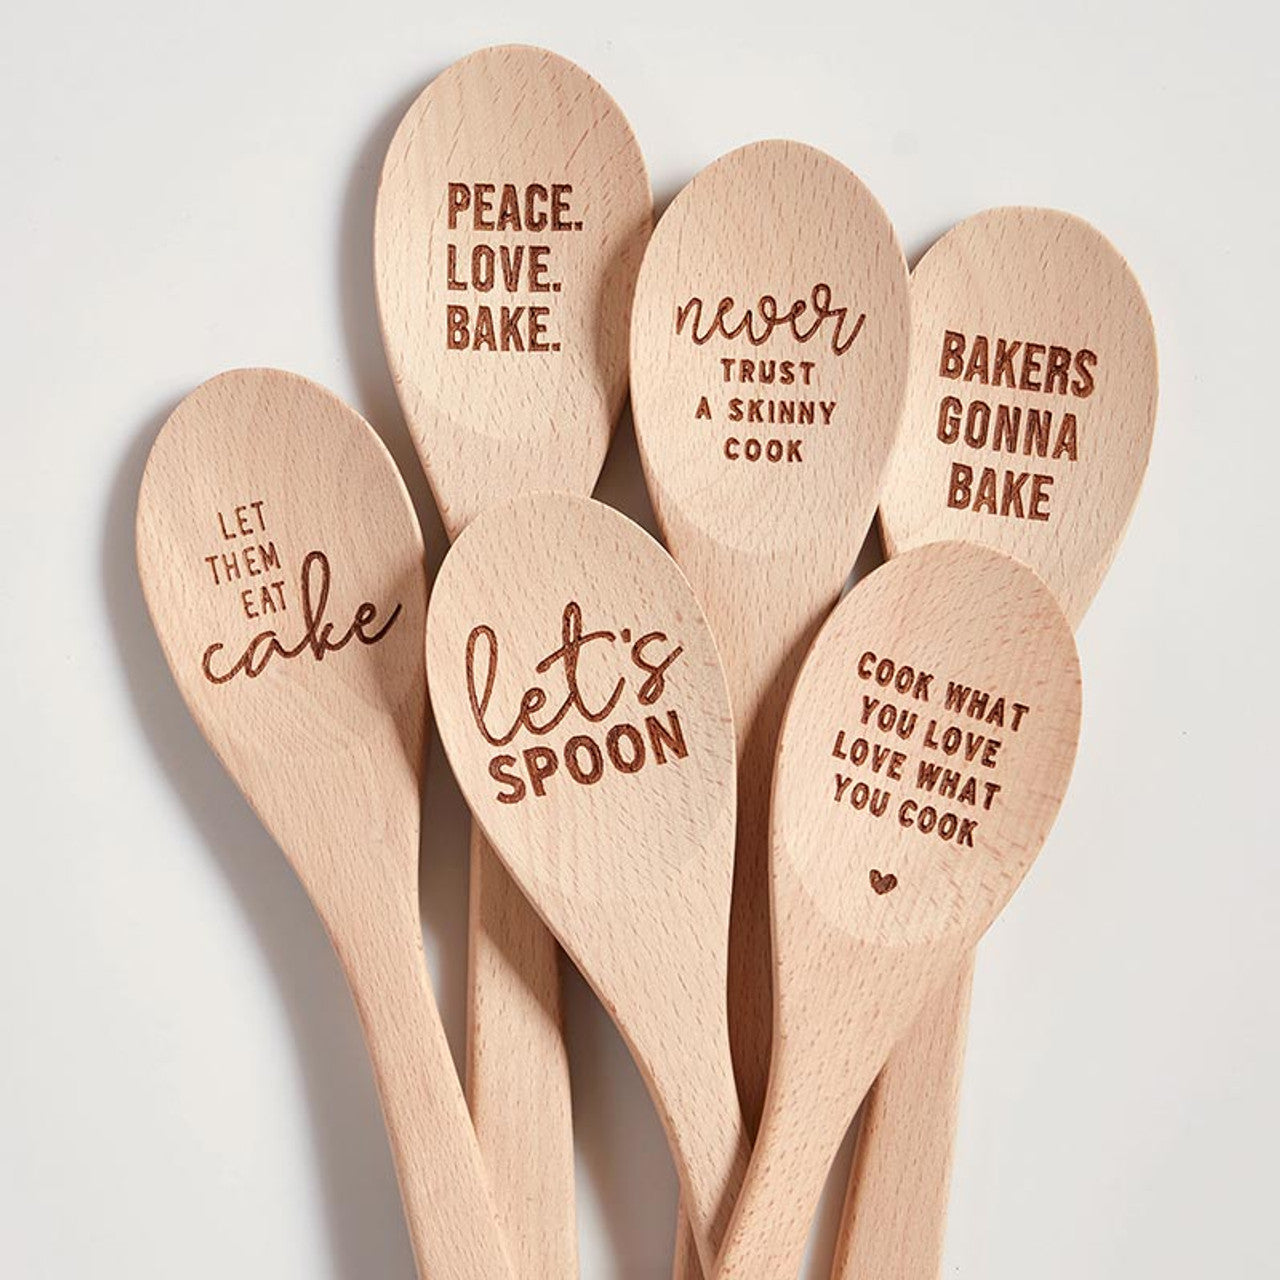 Baker's Gonna Bake Cooking Spoon | Wooden Kitchen Utensil in Canvas Gift Bag